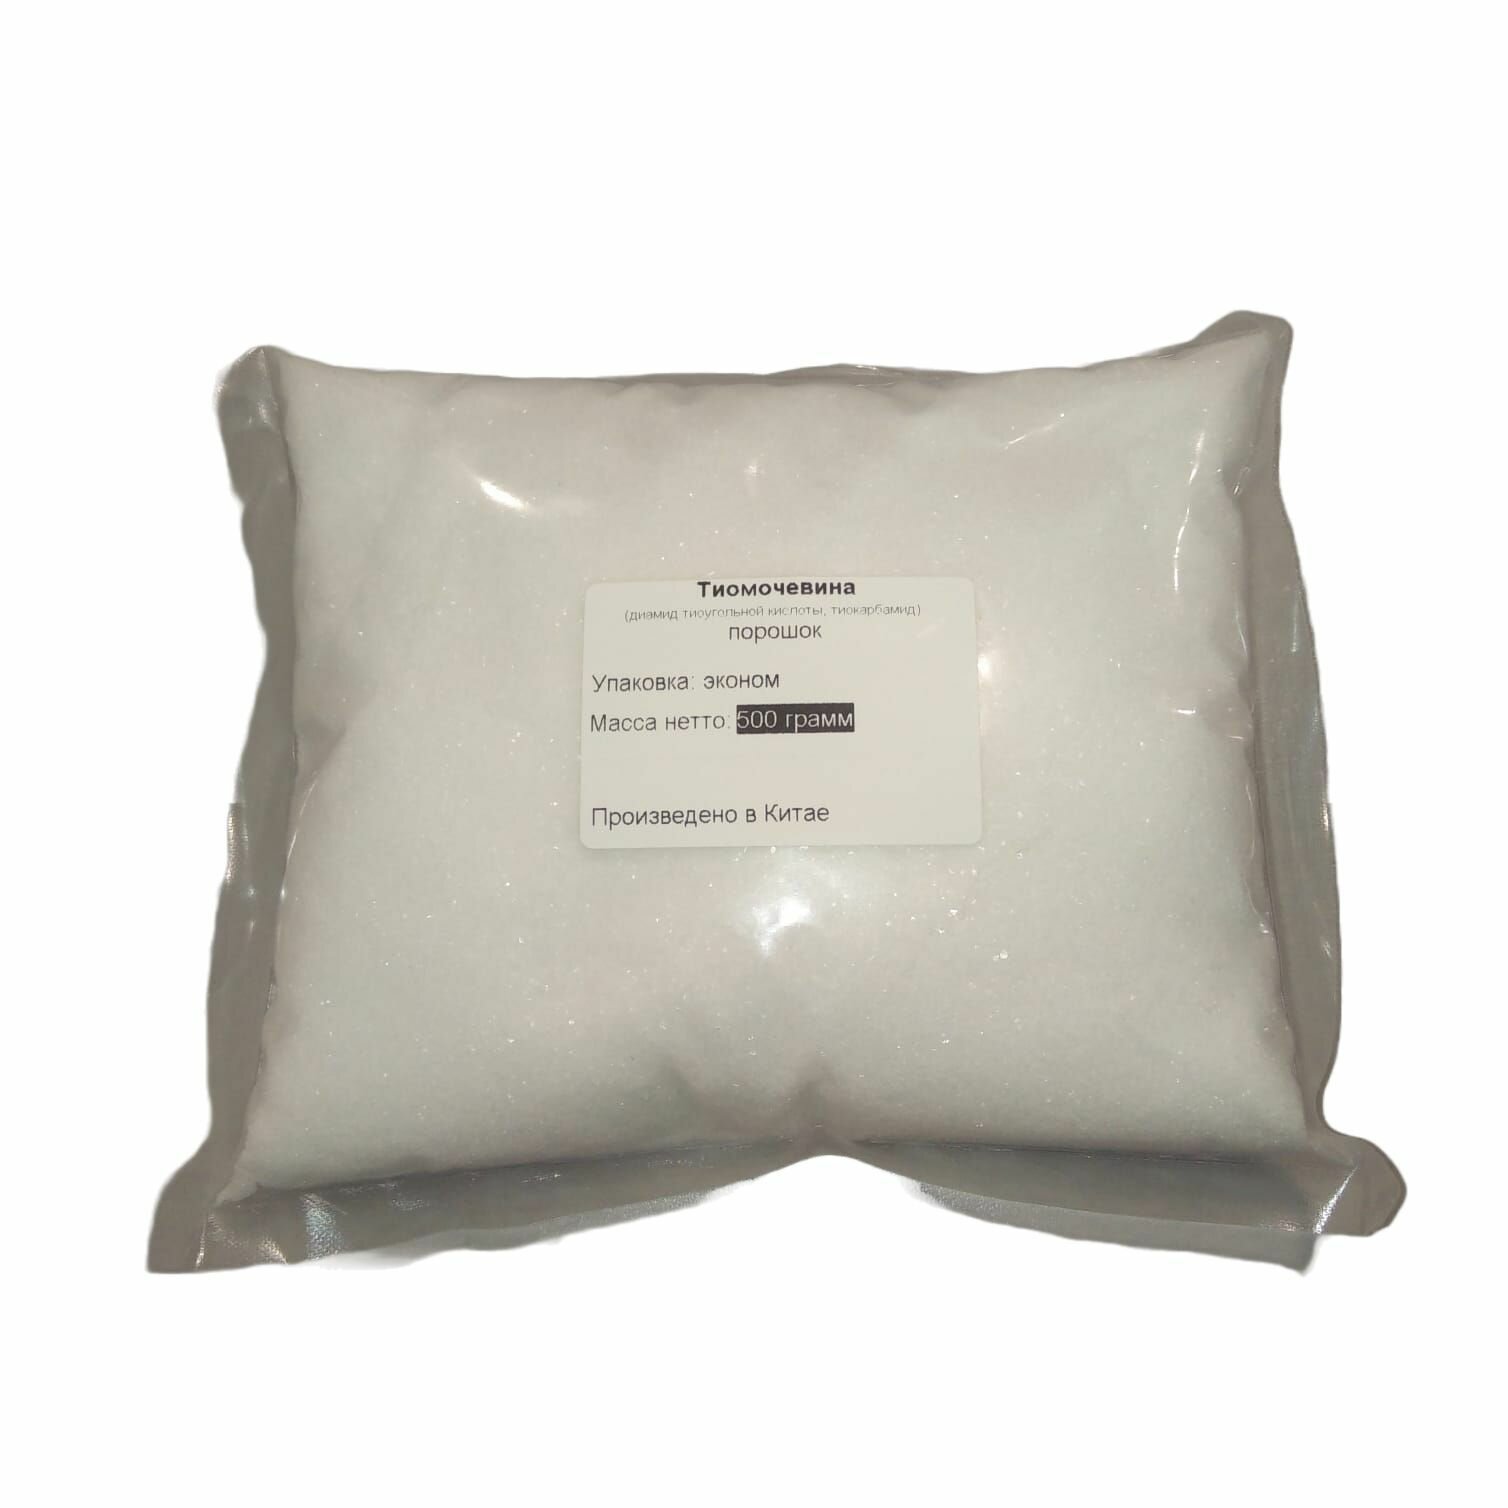 Тиомочевина (диамид тиоугольной кислоты, тиокарбамид) - 500 грамм